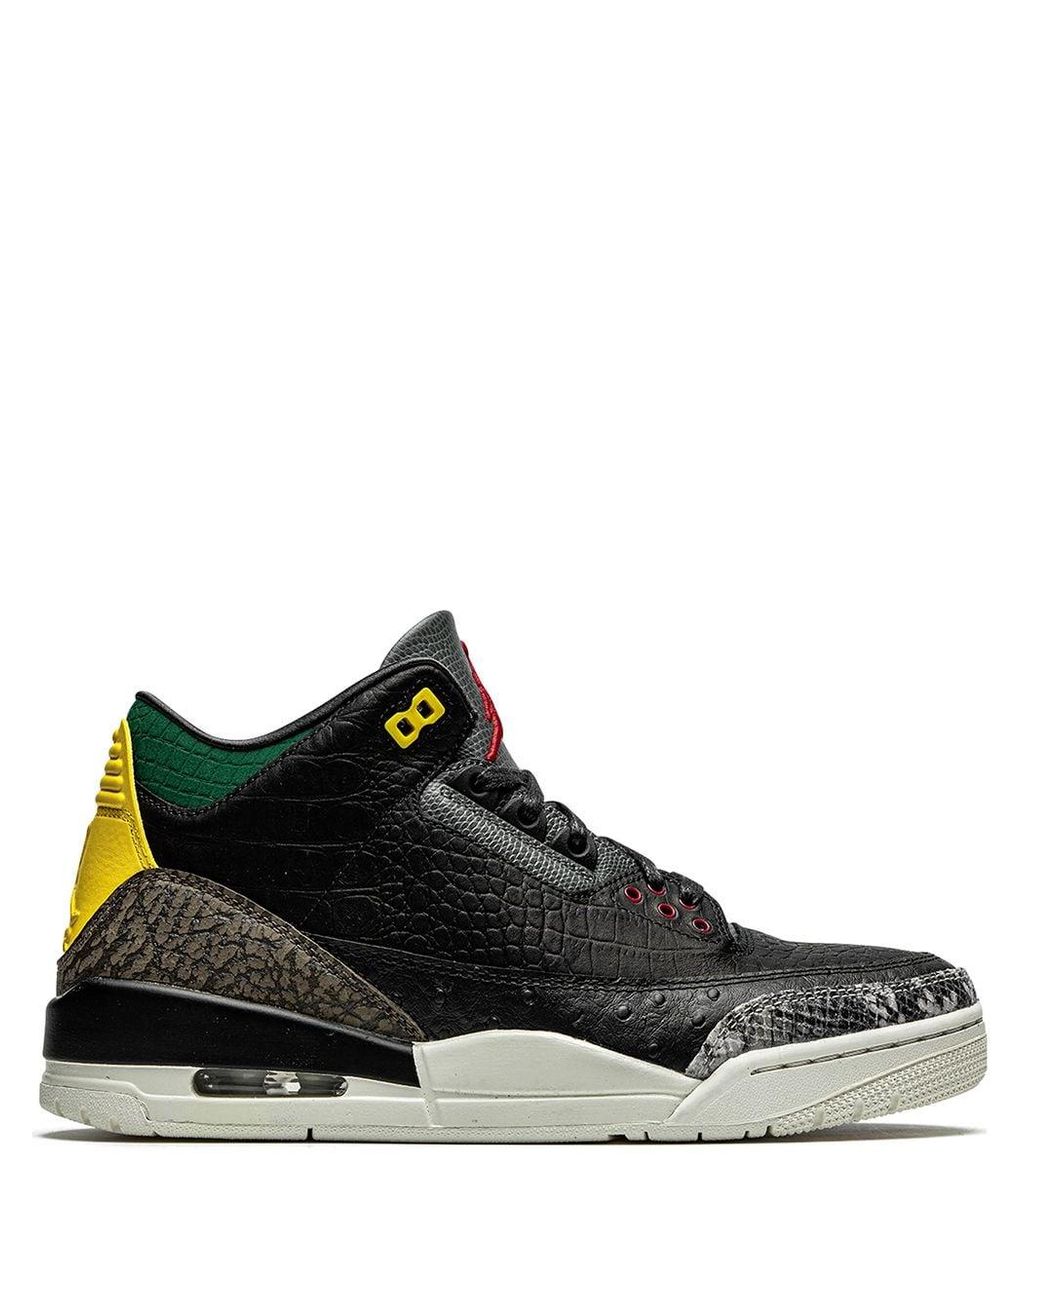 Nike Air Jordan 3 Retro Se in Black/White/Green (Black) for Men - Save 65%  | Lyst